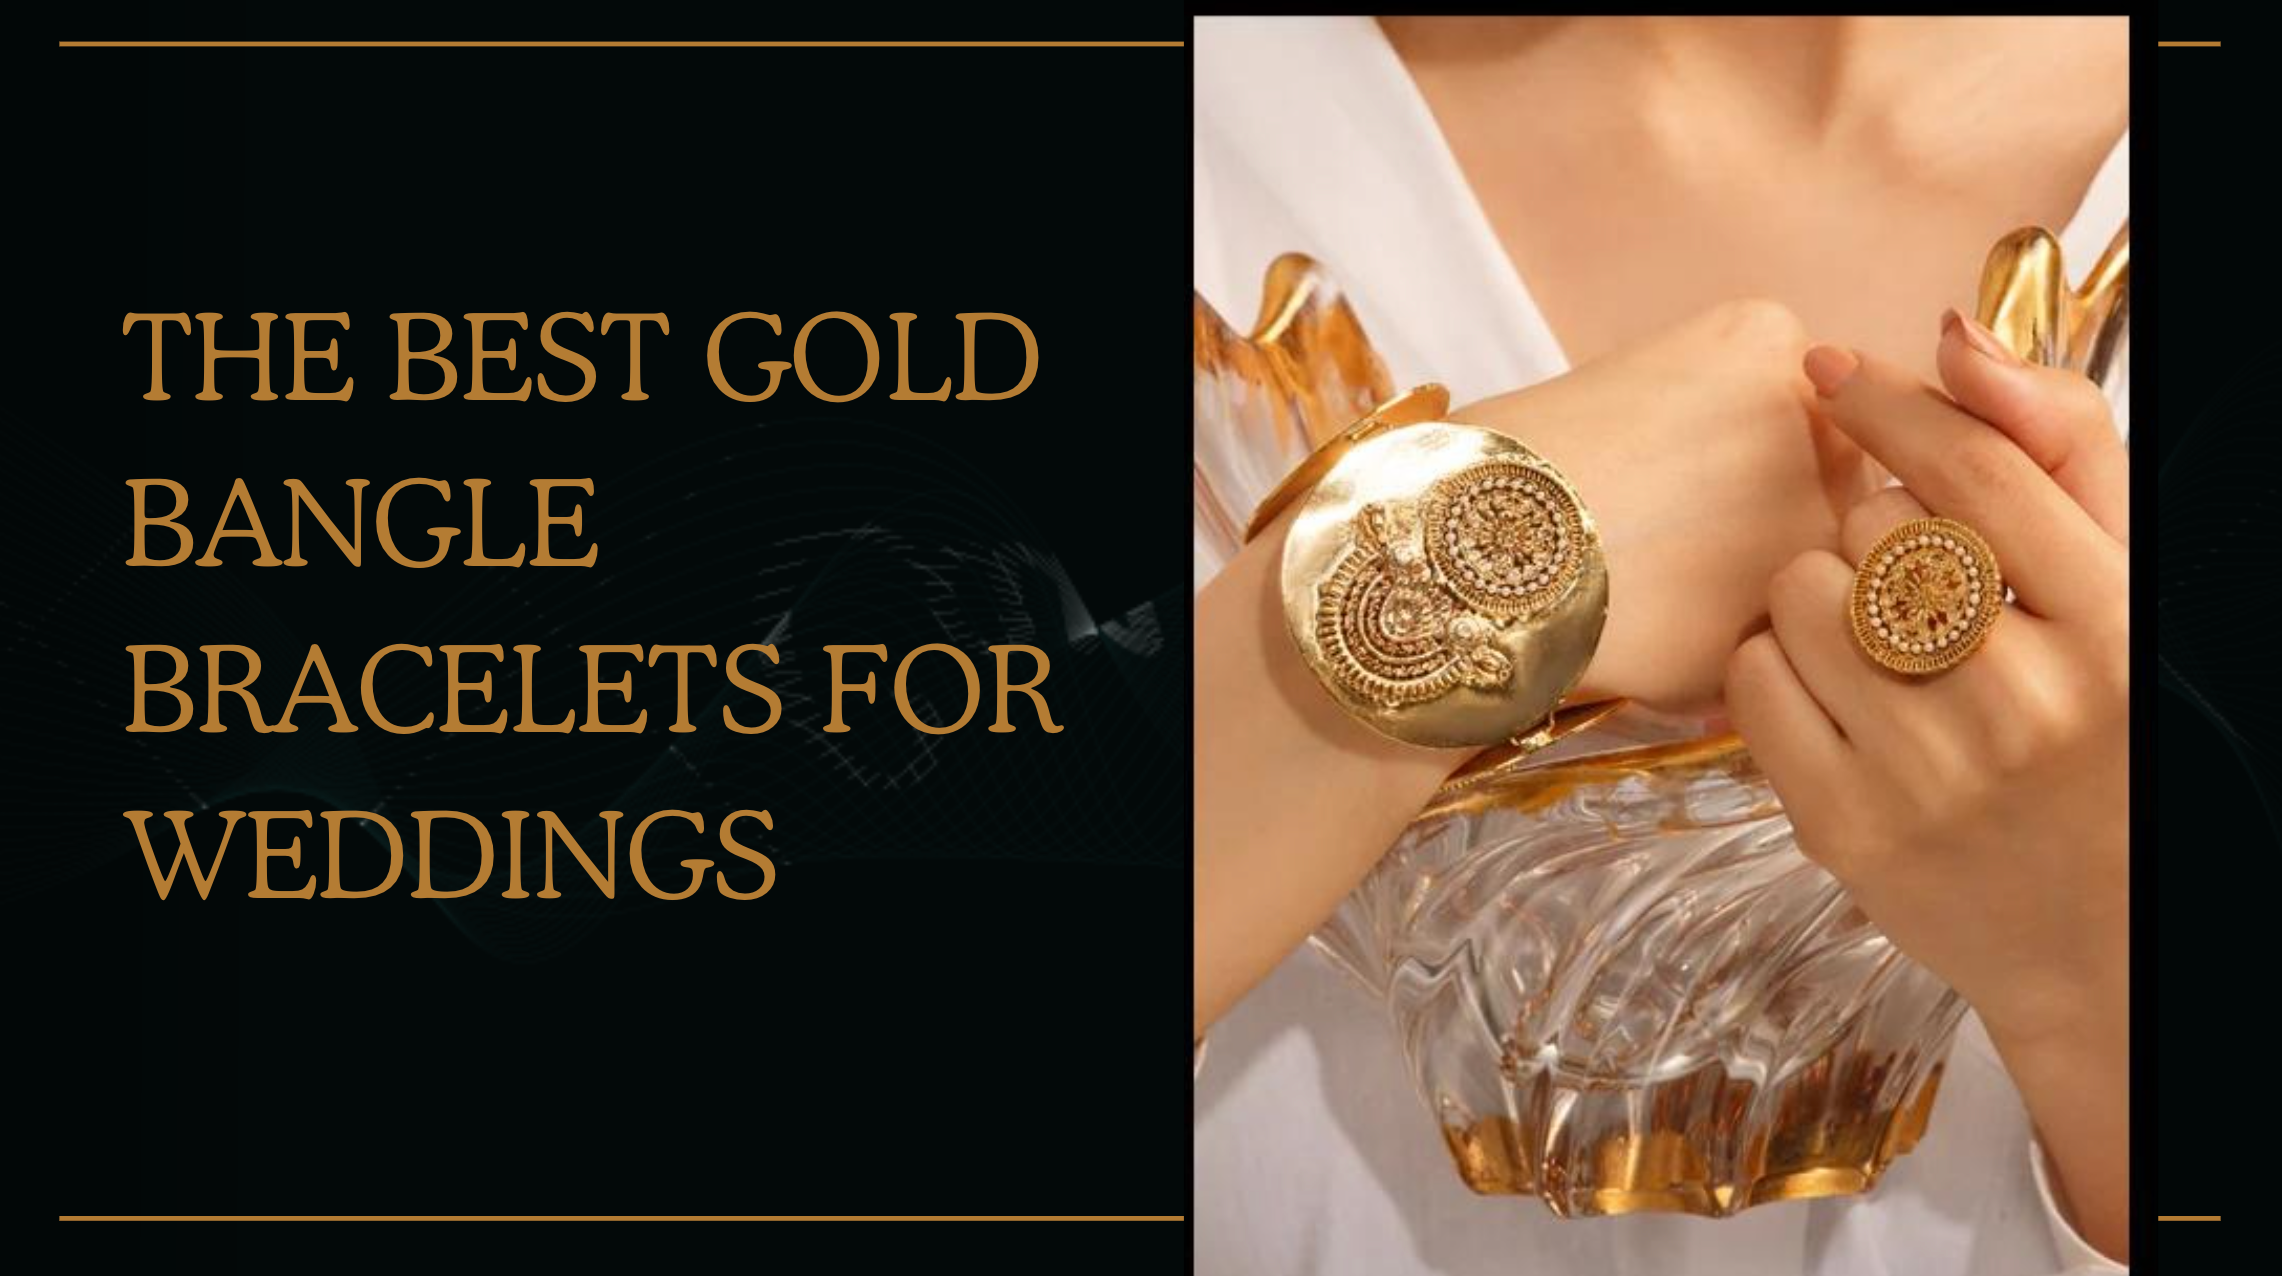 The Best Gold Bangle Bracelets for Weddings